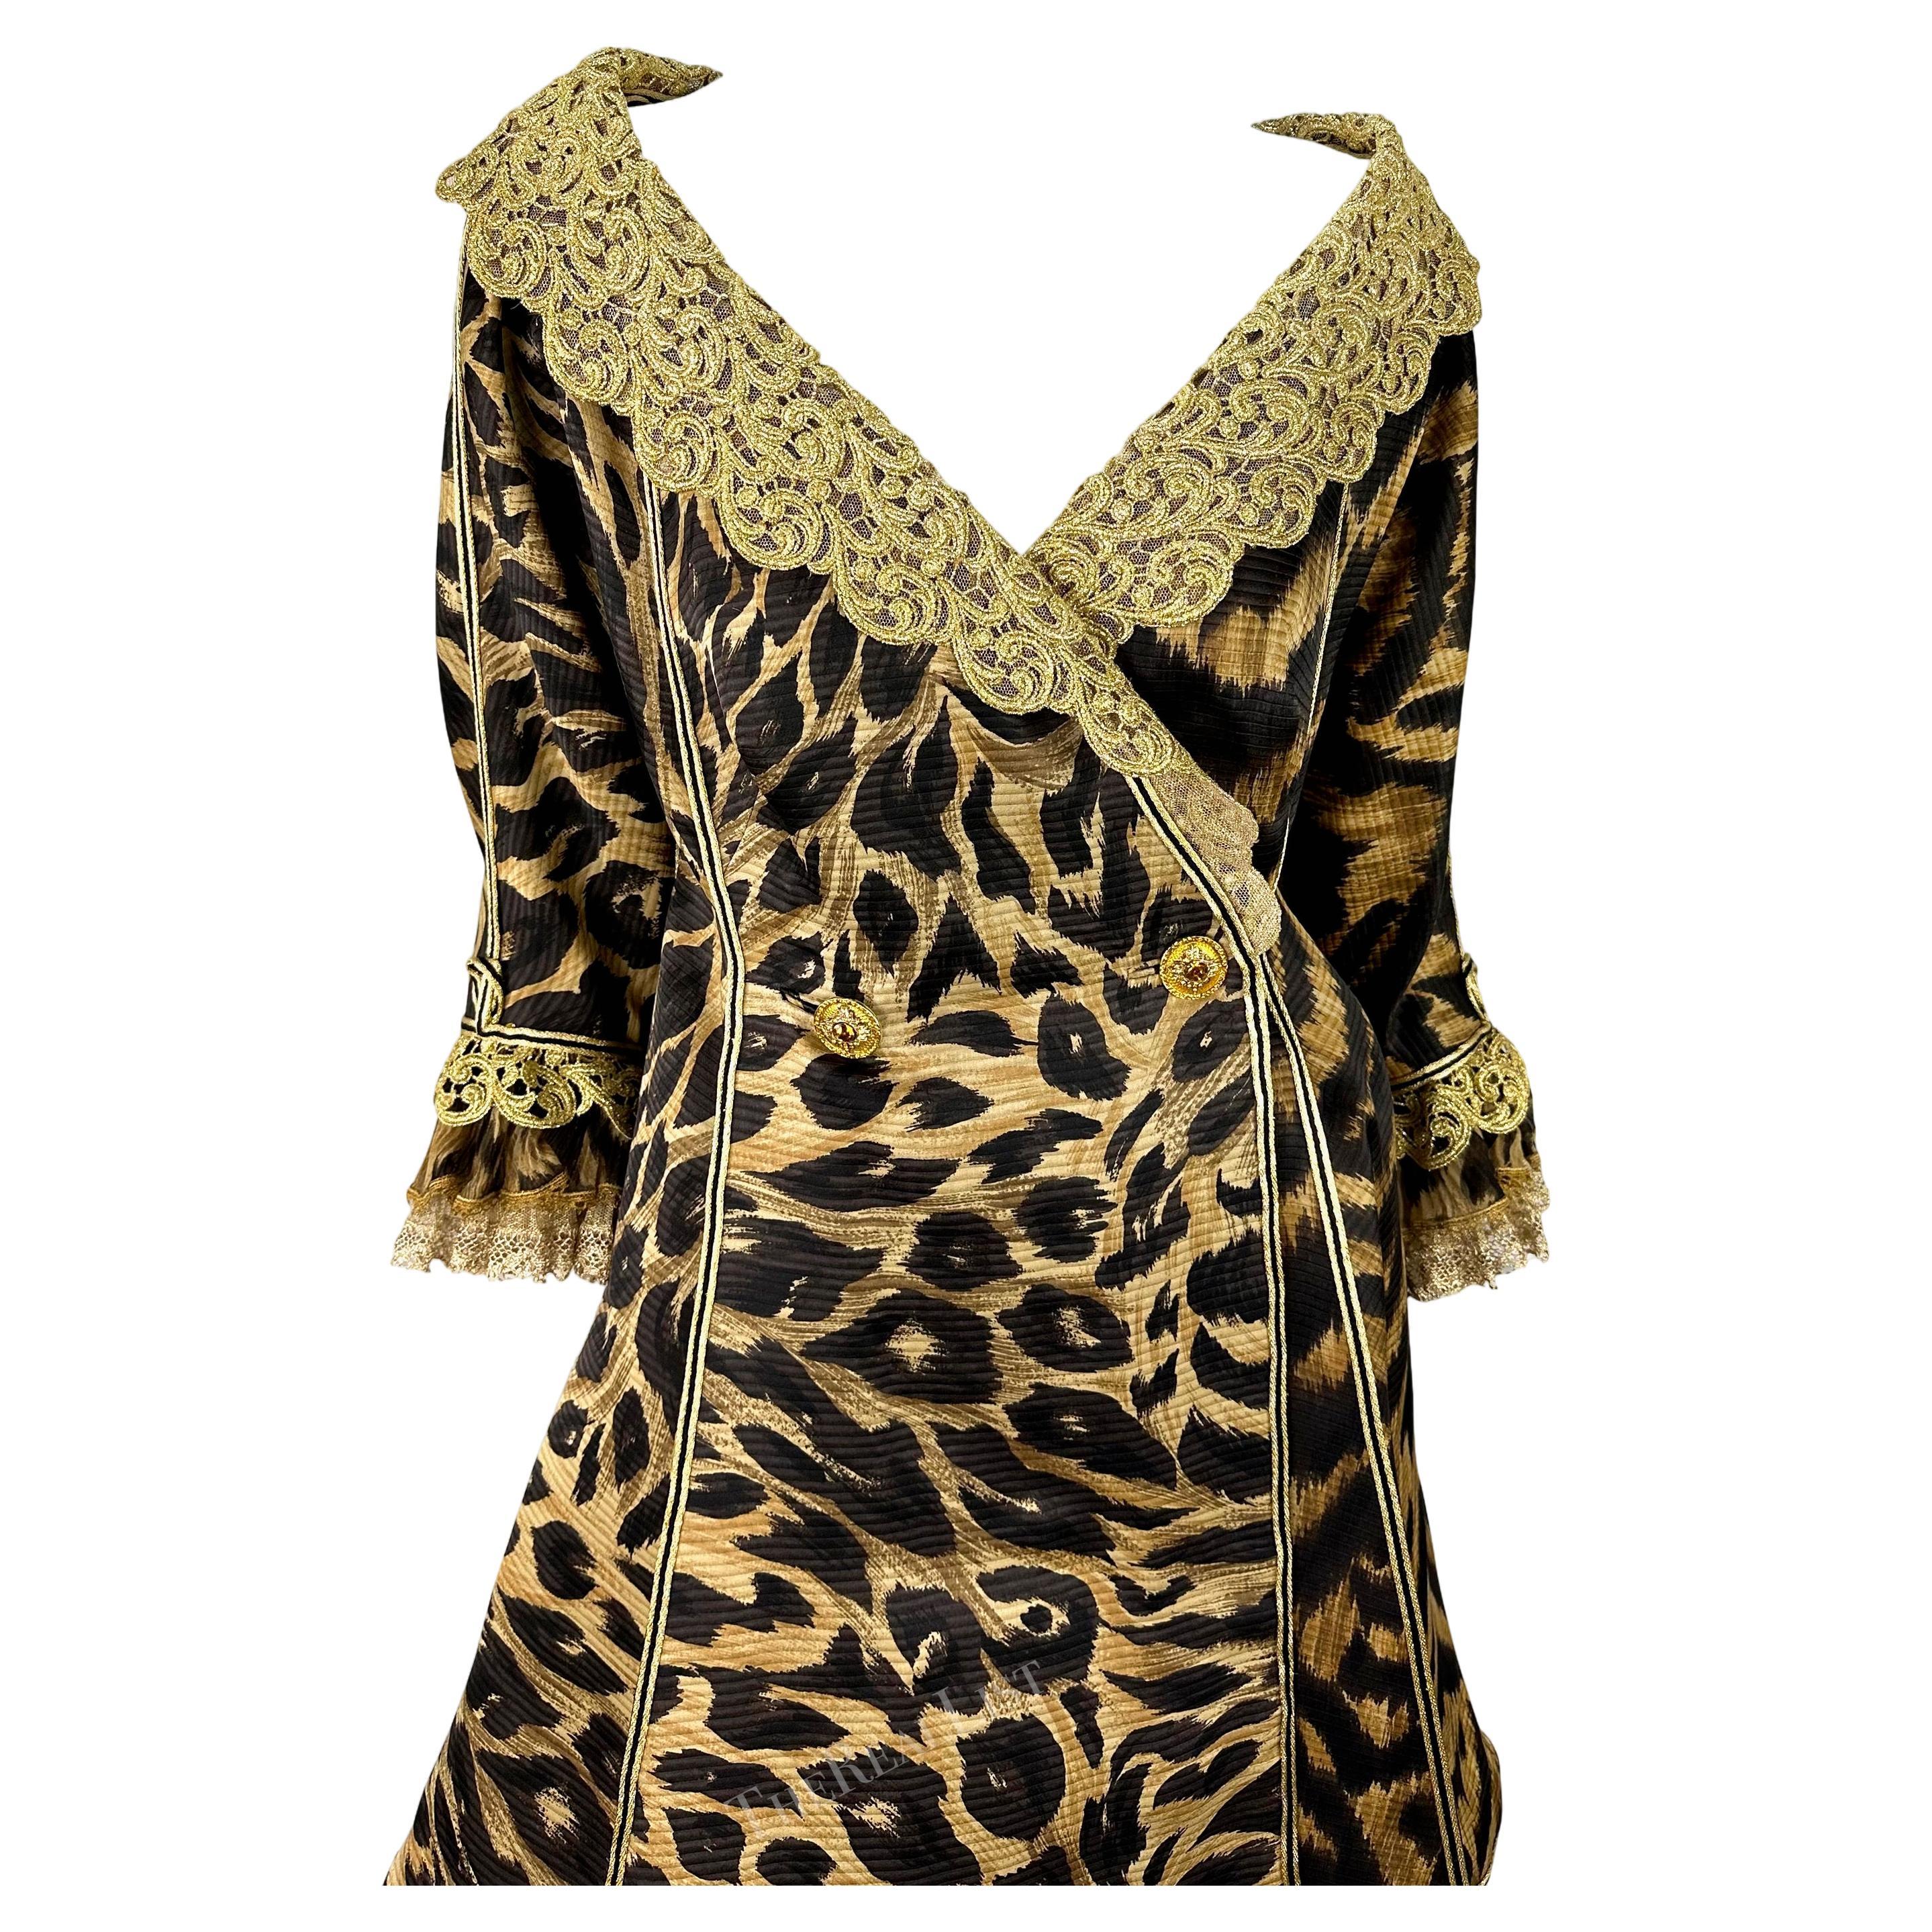 S/S 1992 Atelier Versace Haute Couture Runway Leopard Silk Gold Lace Coat Dress For Sale 10